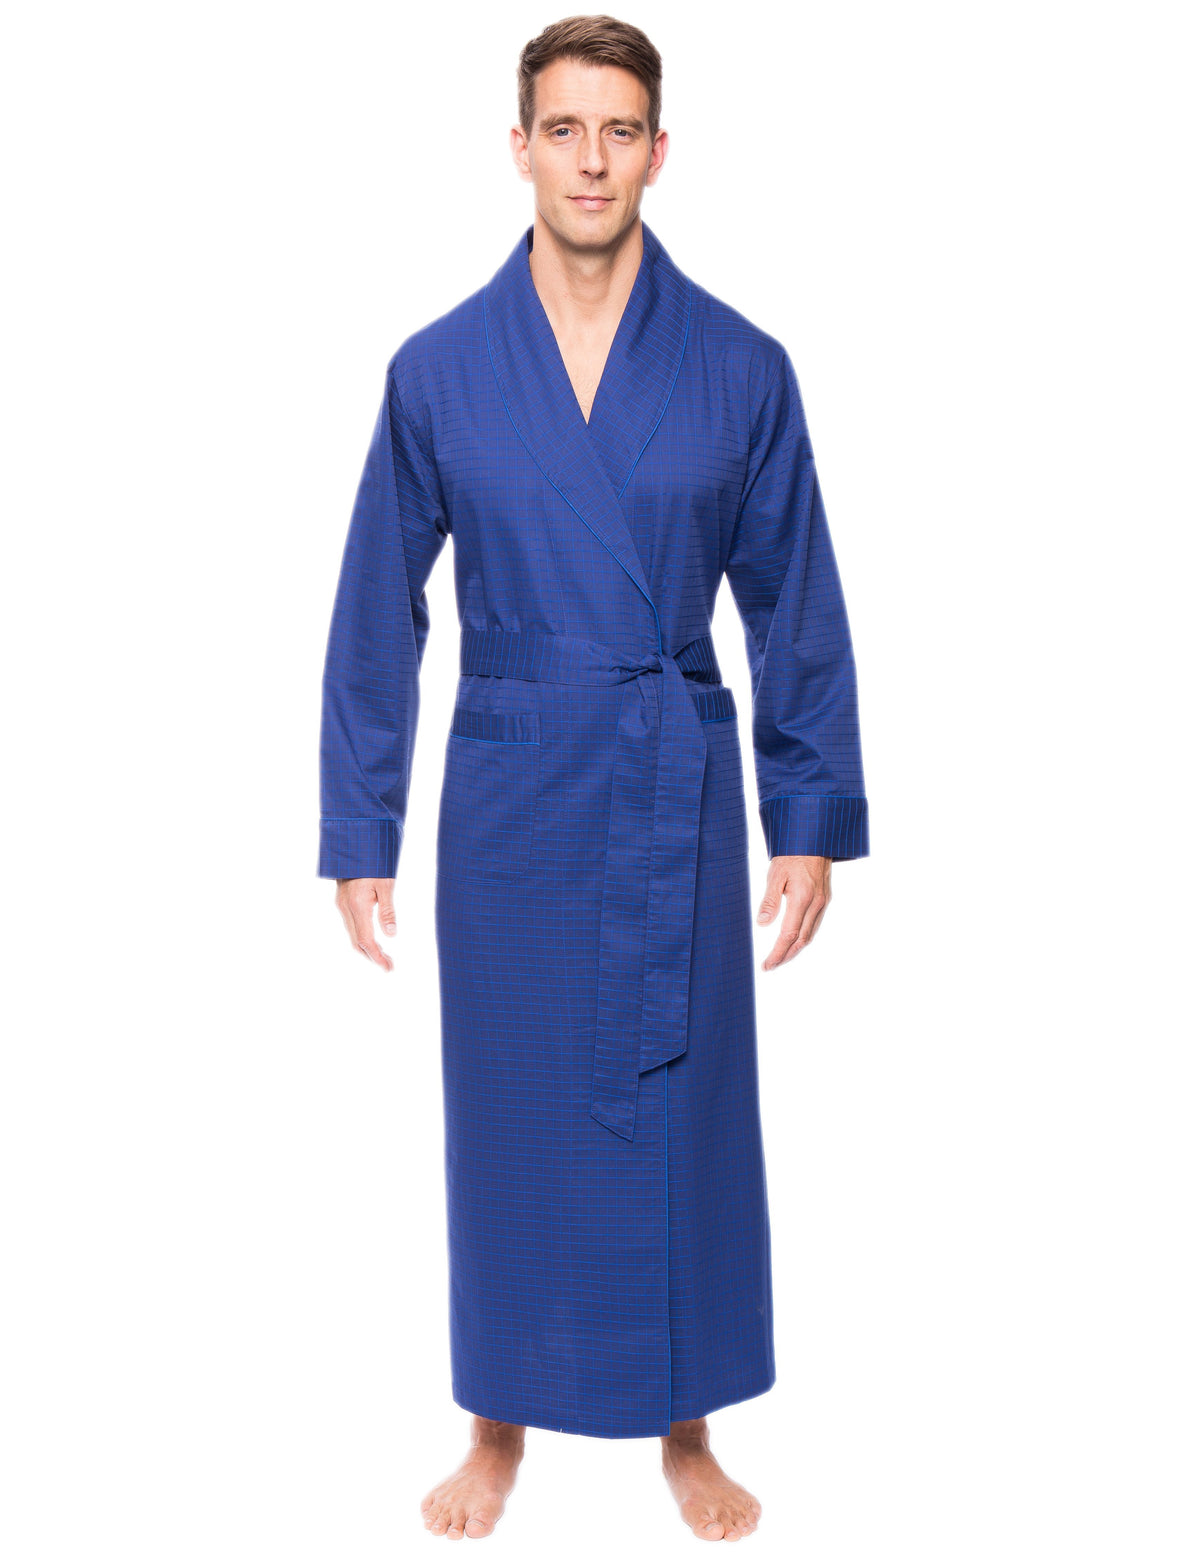 Mens Premium 100% Cotton Full-Length Robe - Windowpane Checks Navy/Blue